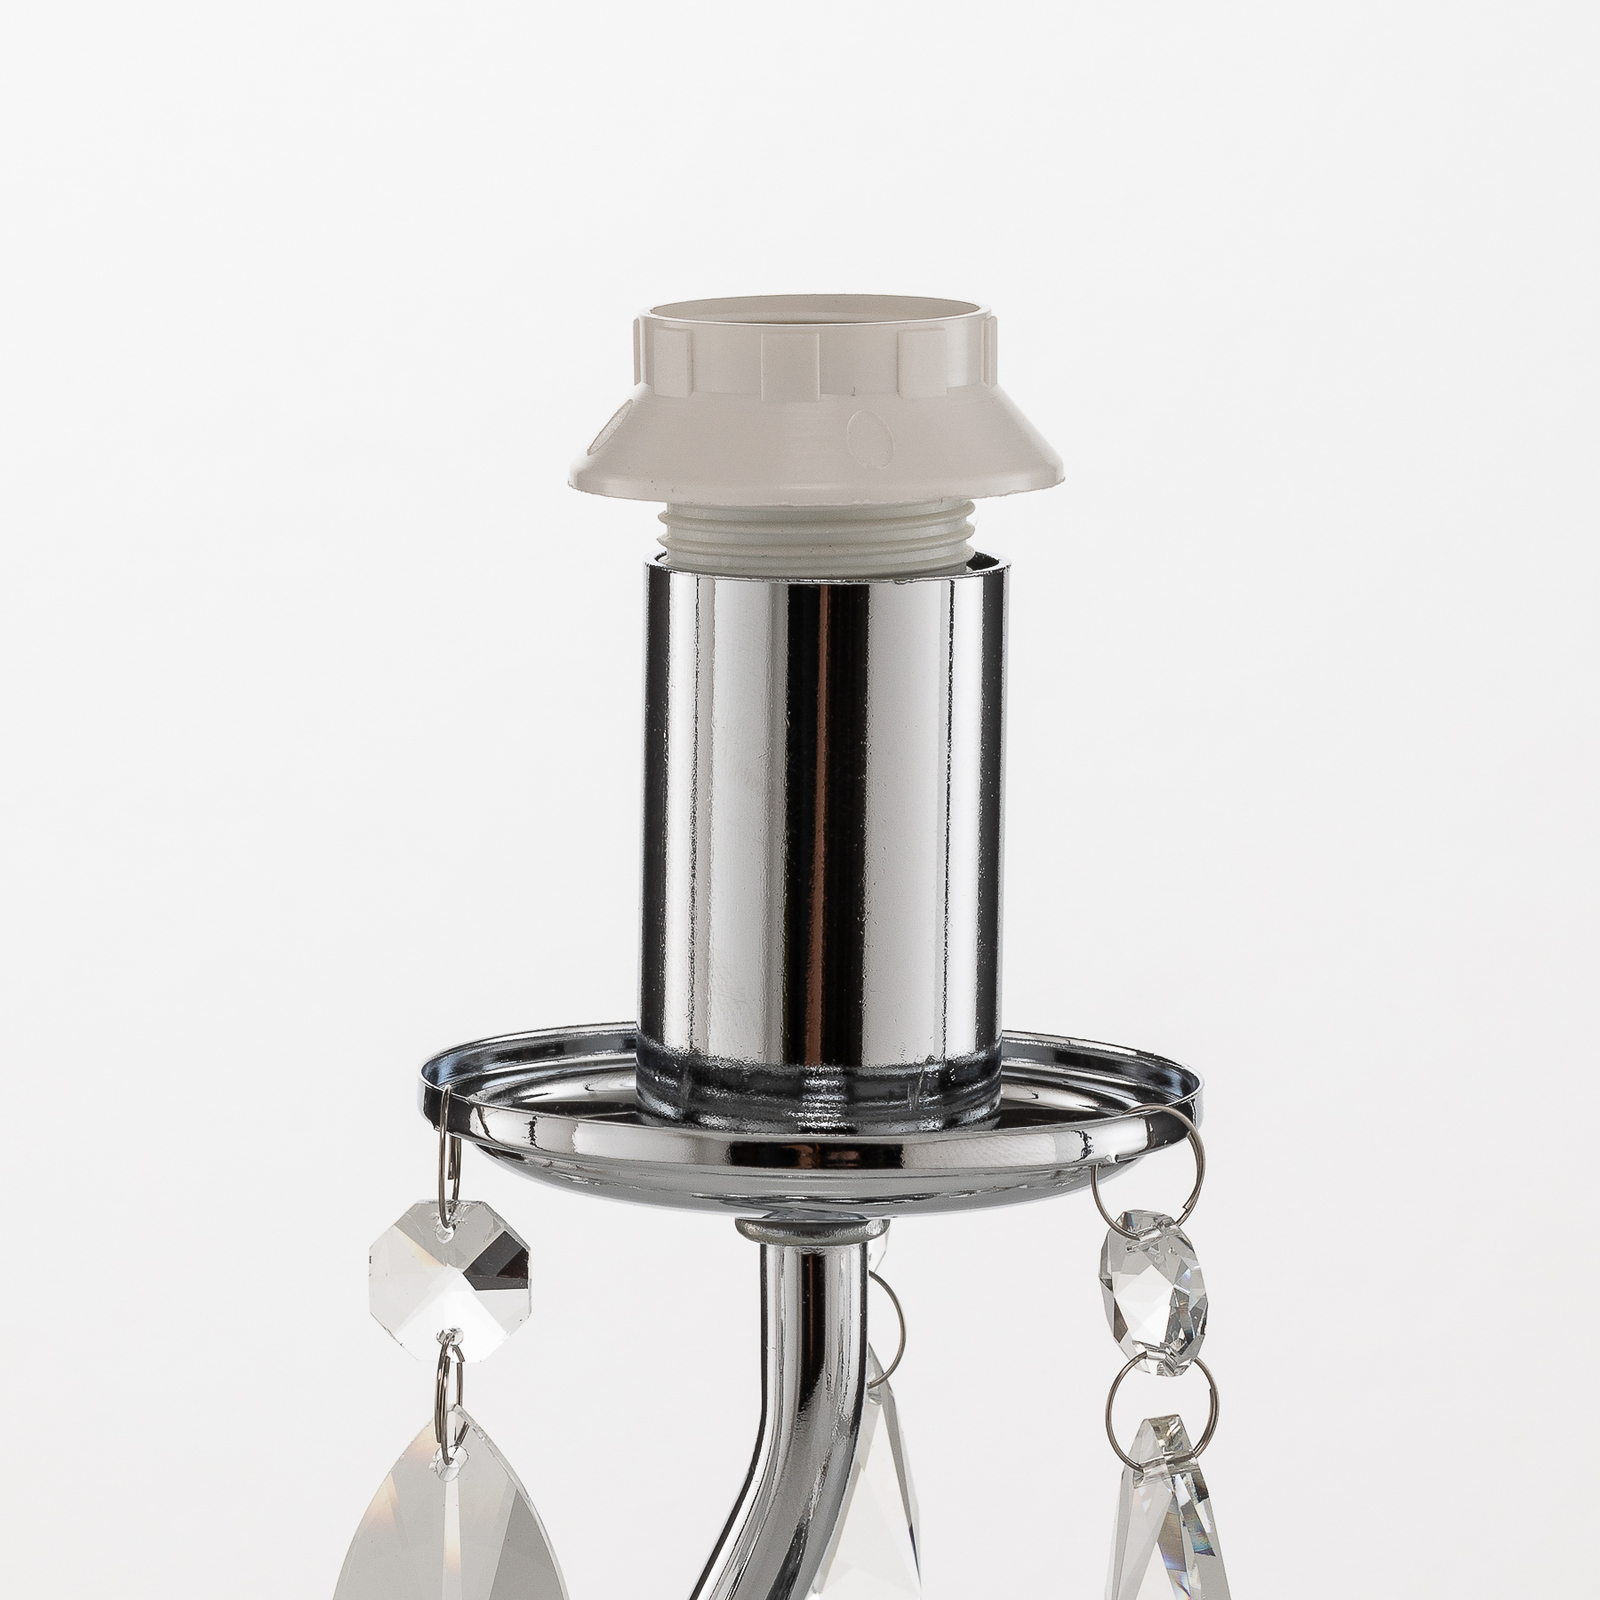 Jacqueline table lamp, 1-bulb, white